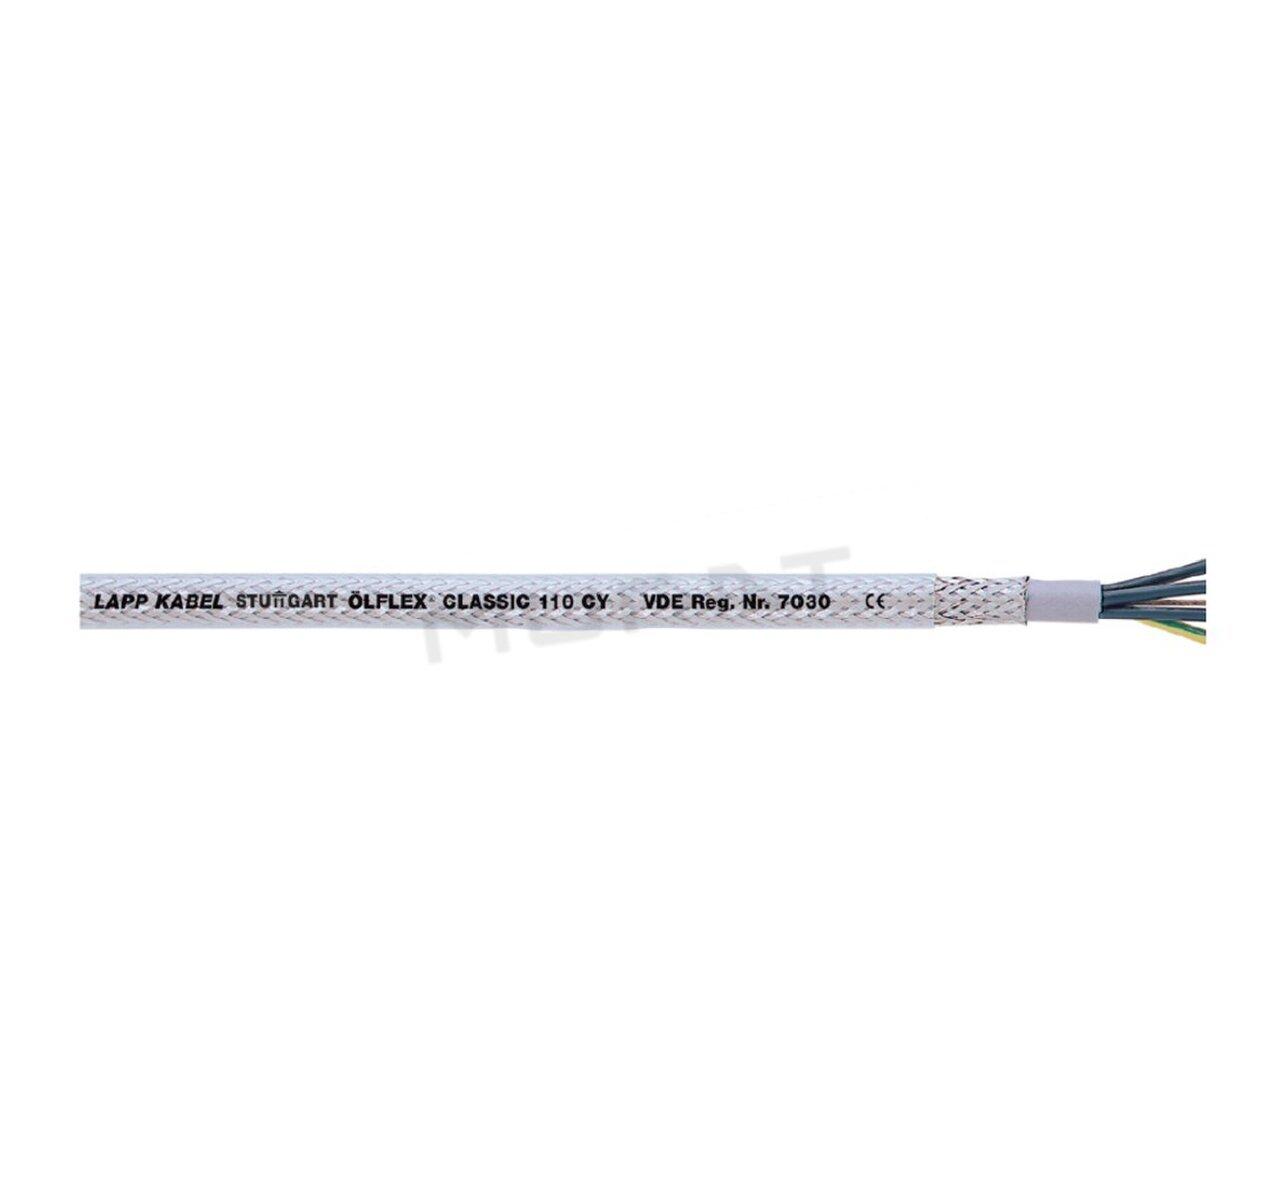 Kábel OLFLEX CLASSIC 110 CY 12Gx2,5 mm2